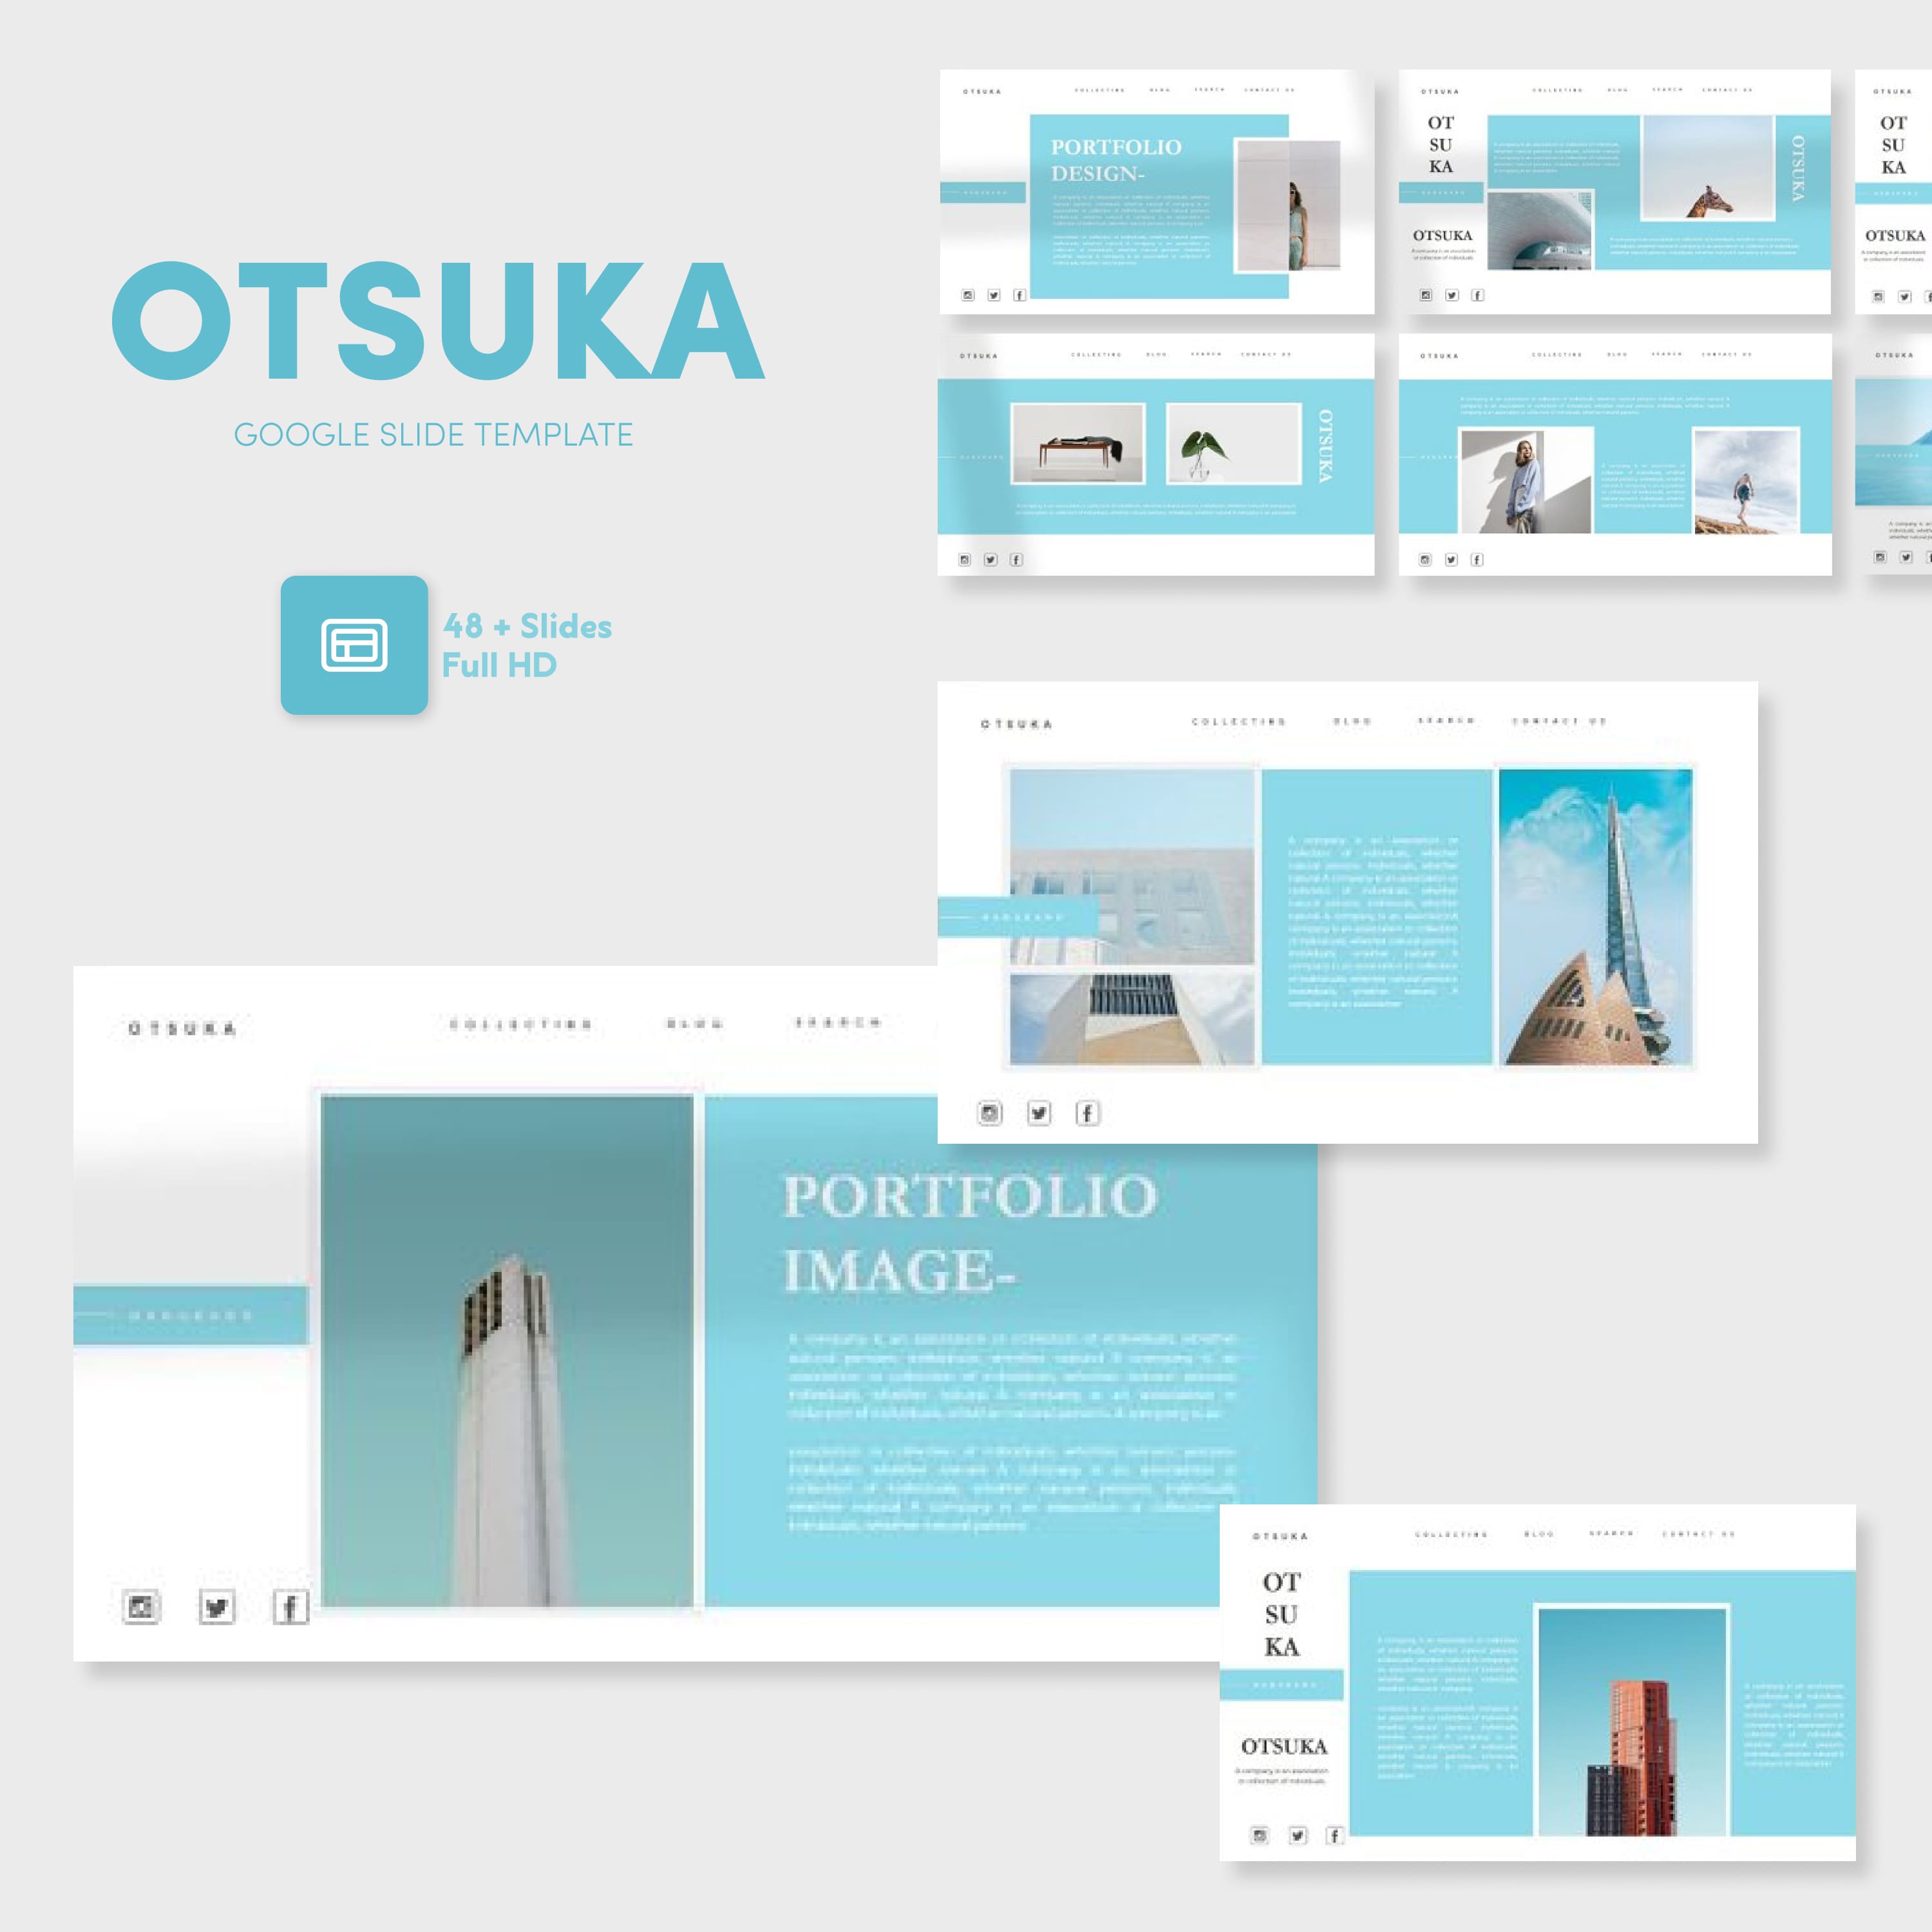 Otsuka google slide template - main image preview.